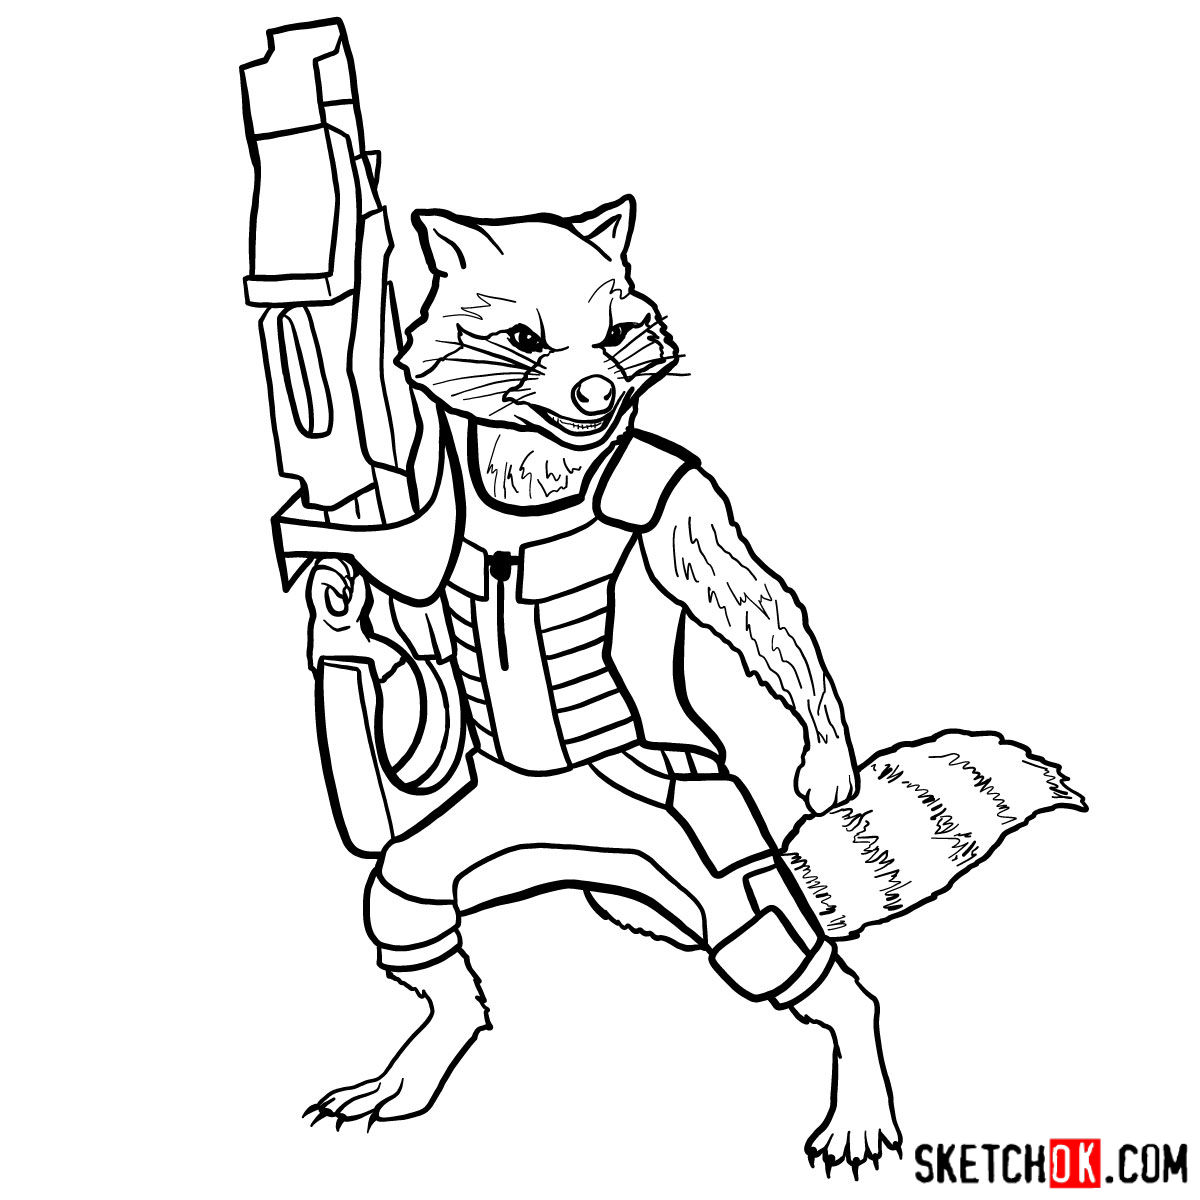 How to draw Rocket Raccoon - step 15